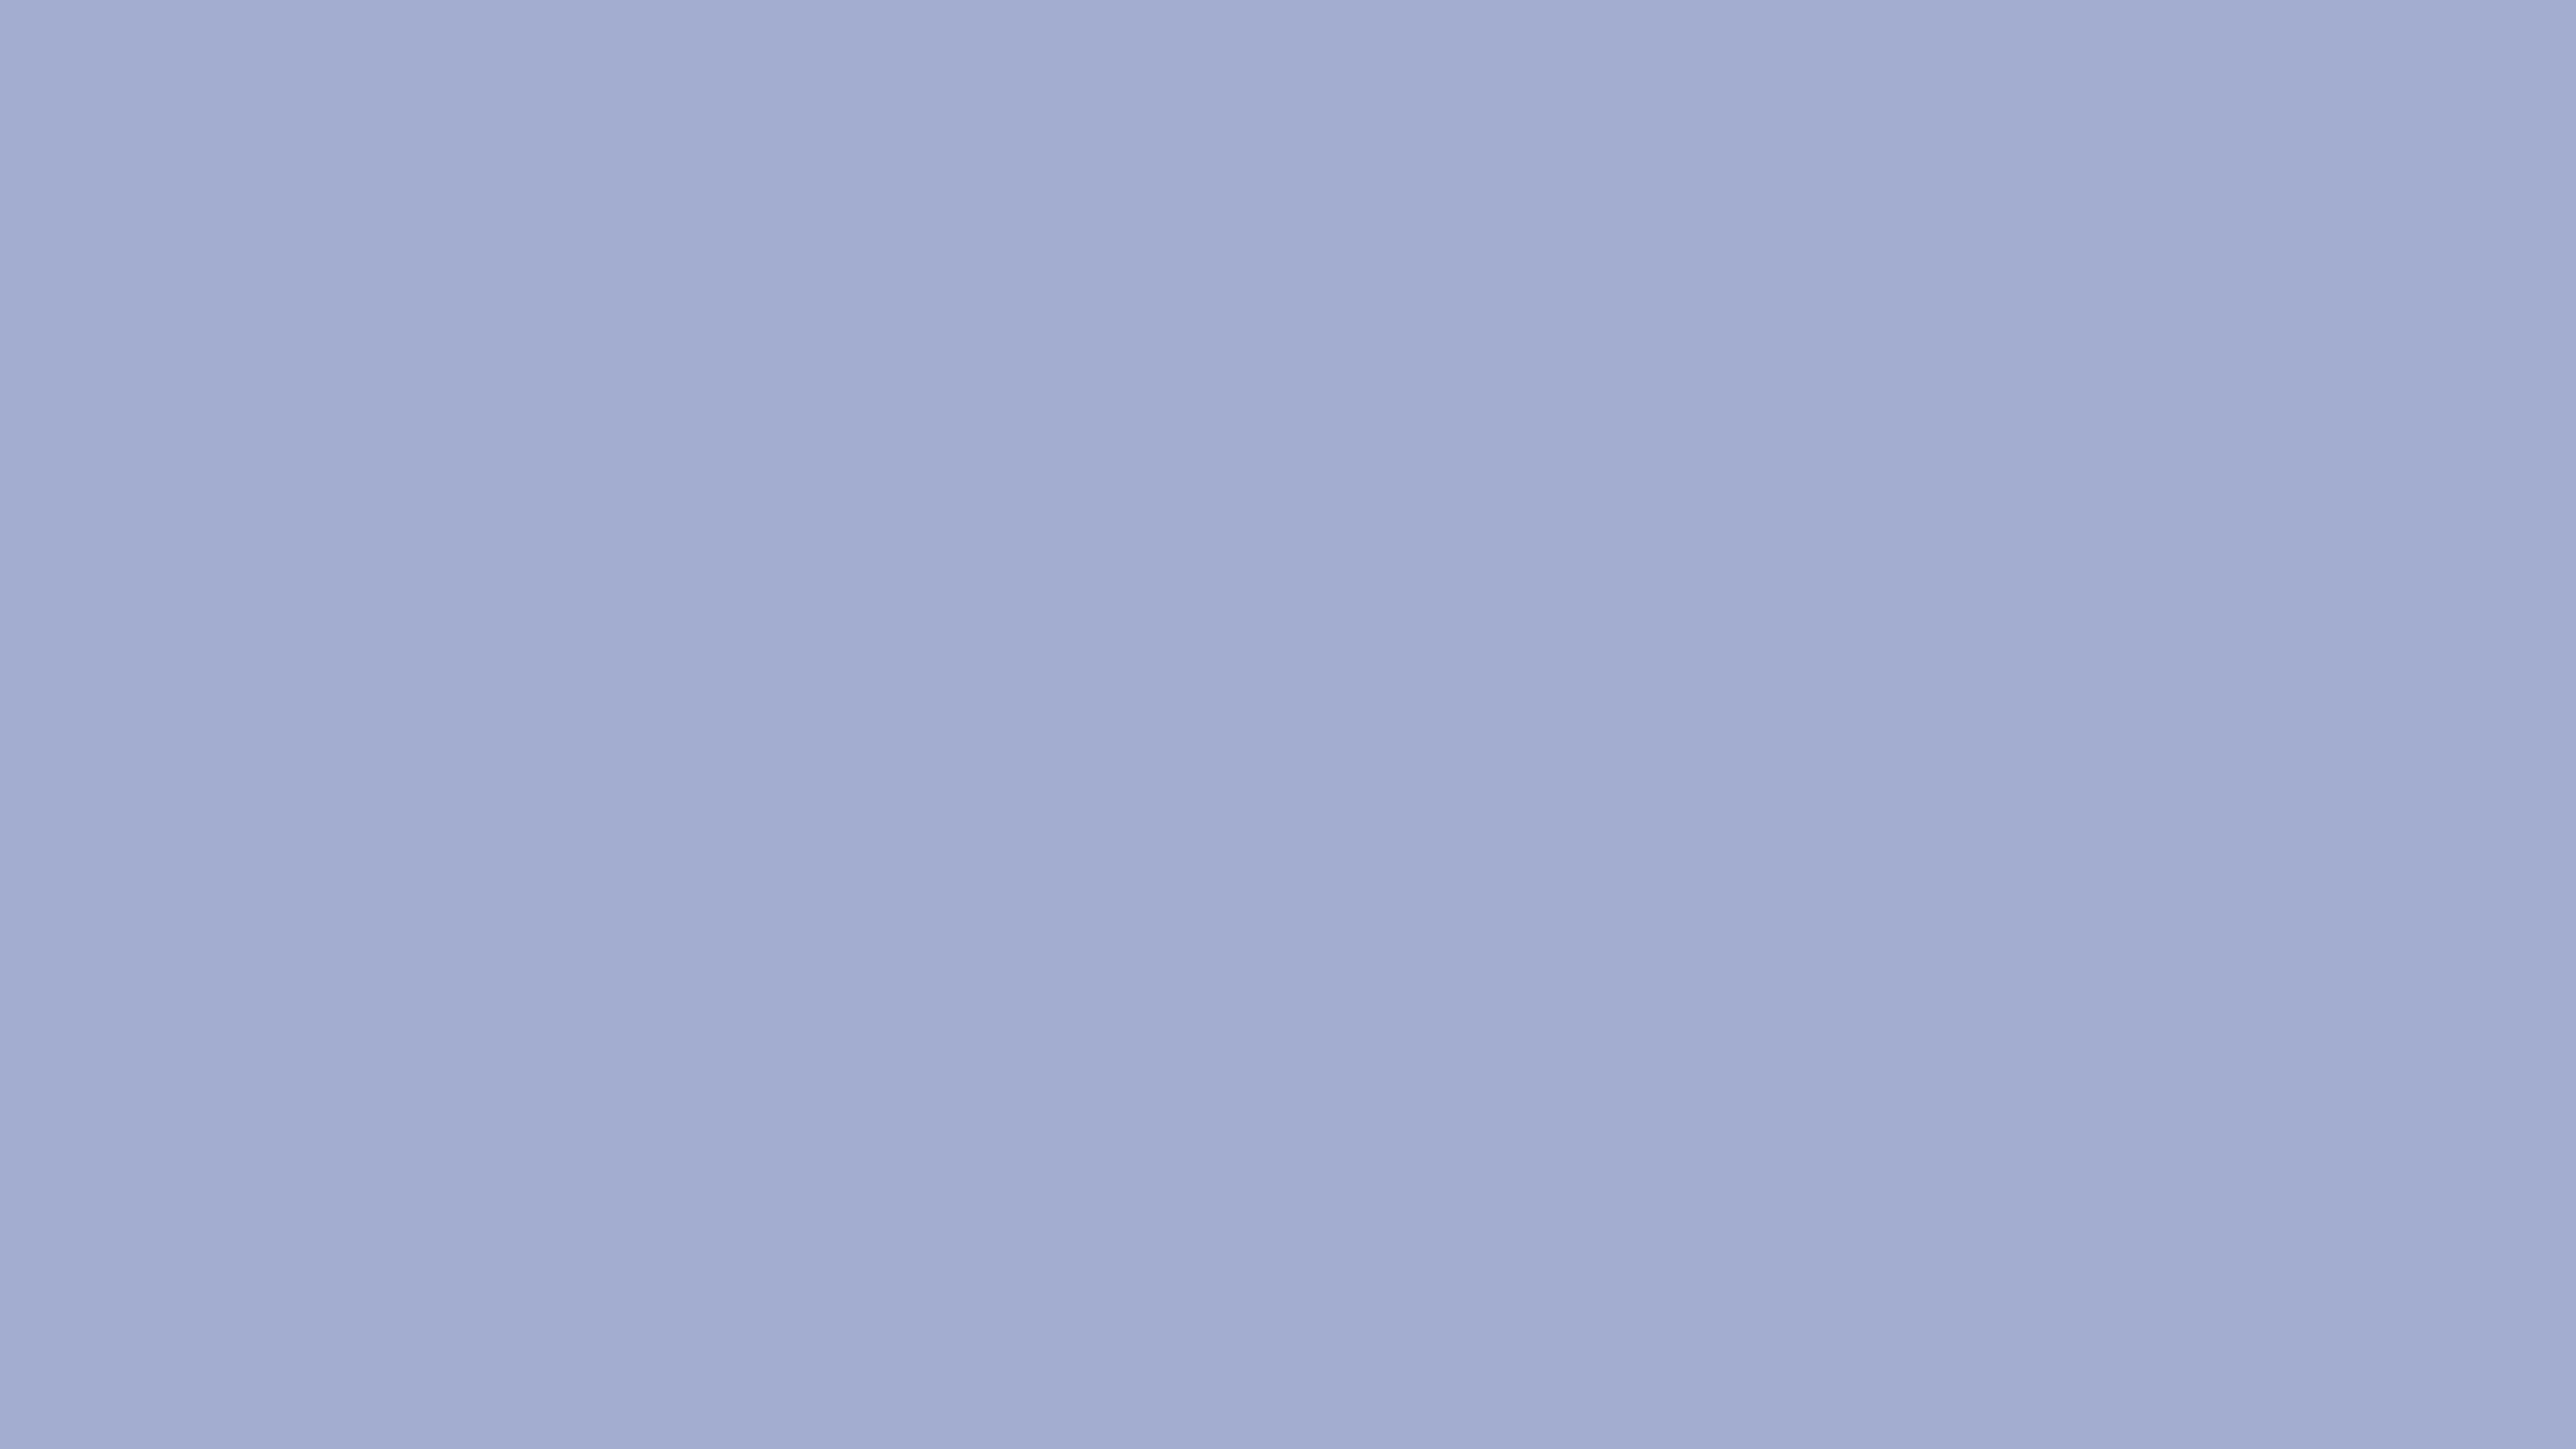 7680x4320 Wild Blue Yonder Solid Color Background